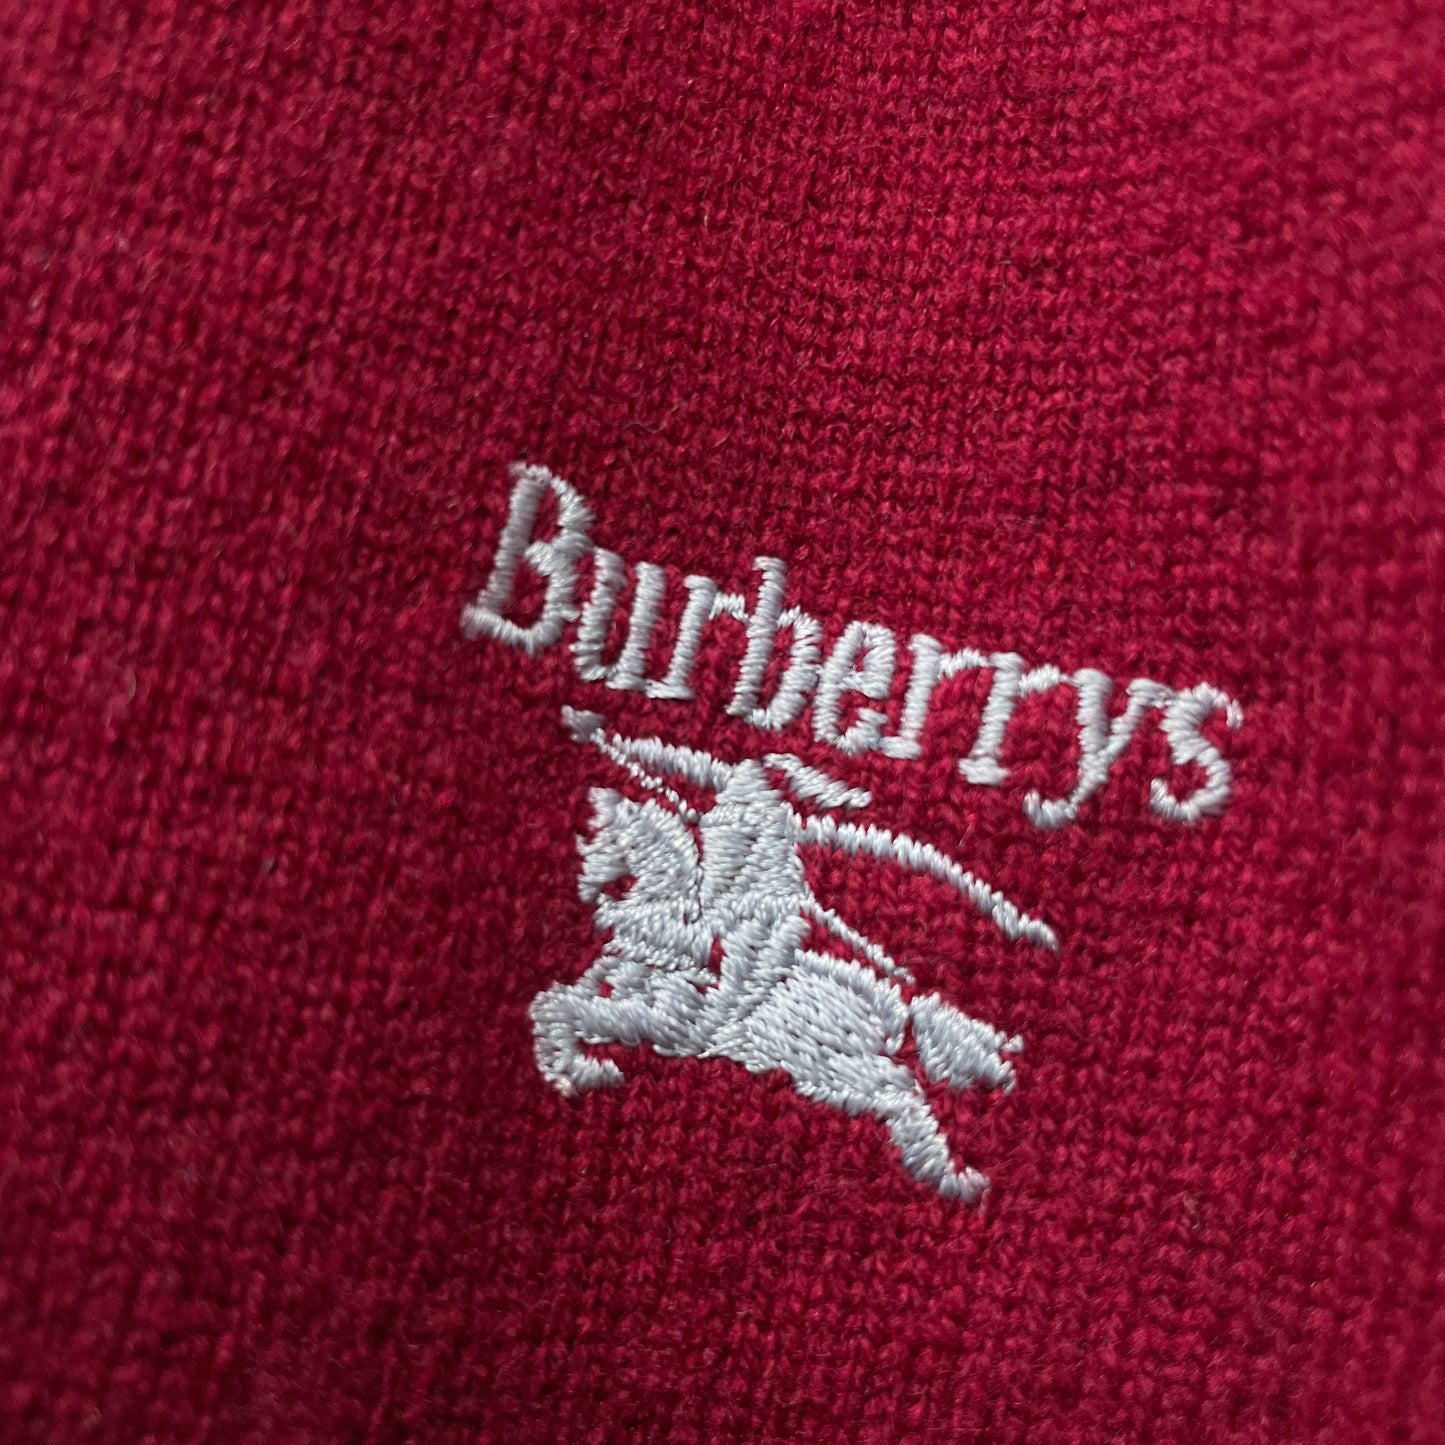 burberrys cardigan